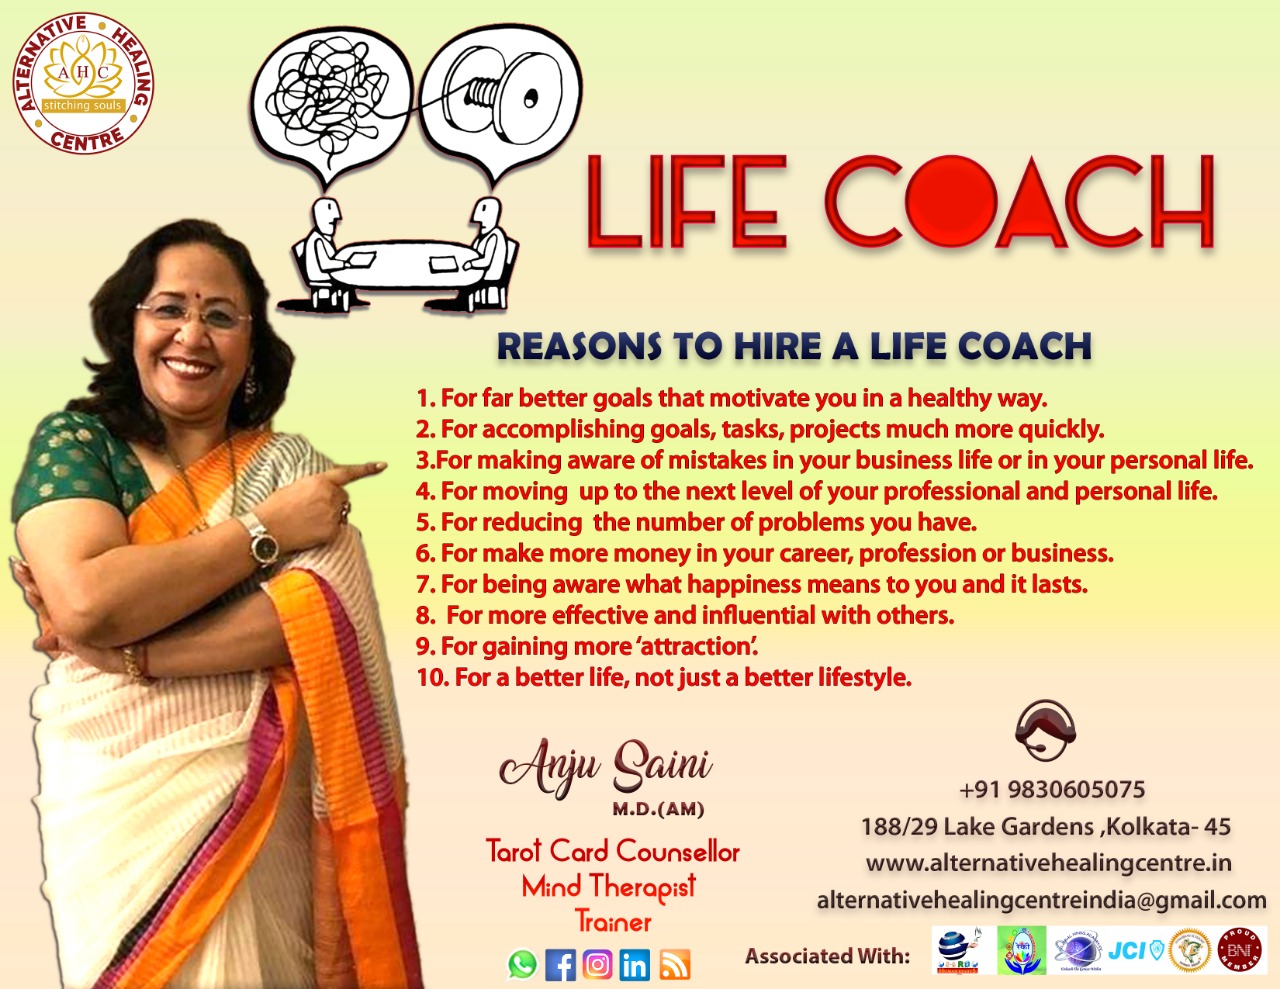 Life Coaching Sessions by Anju Saini - New York